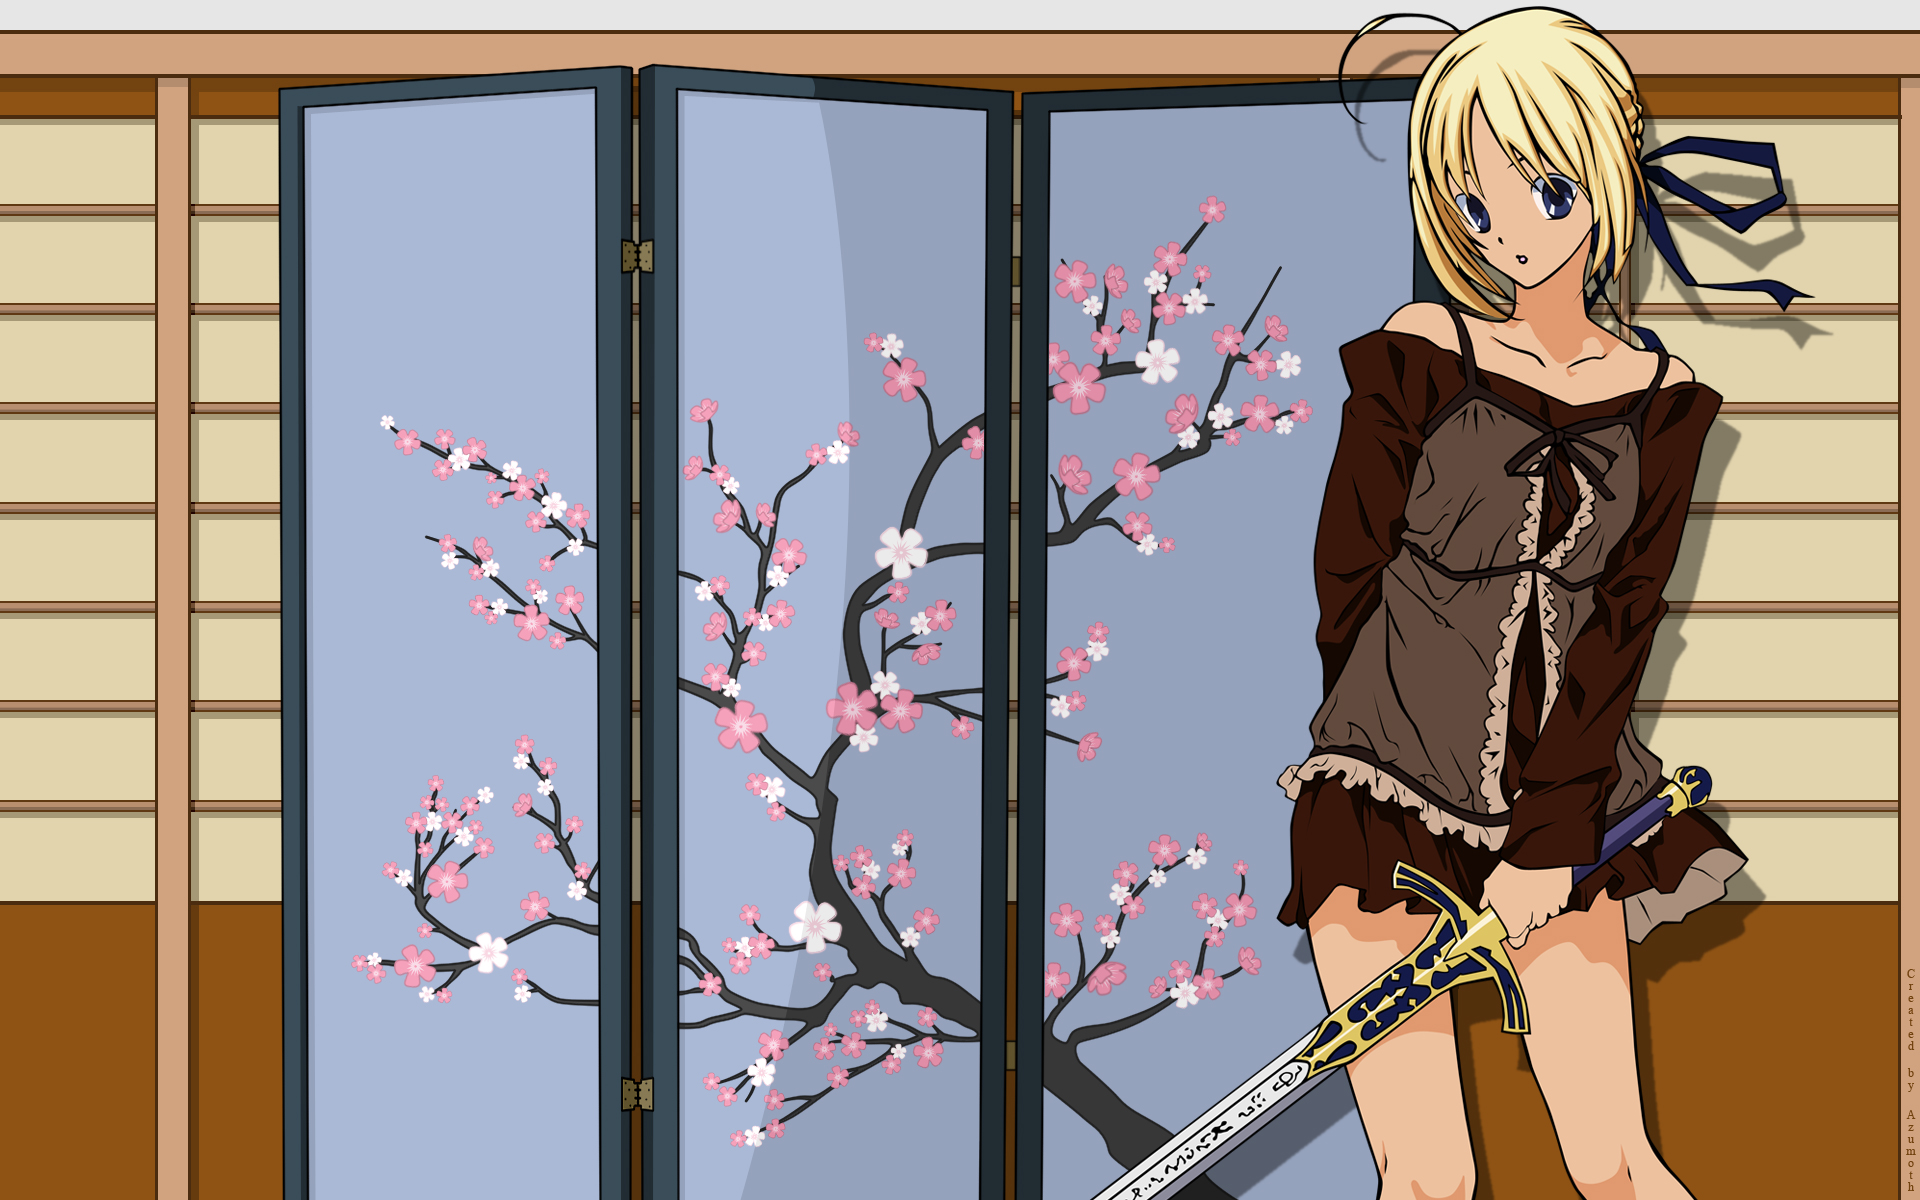 блондинки, вишни в цвету, Fate/Stay Night (Судьба), аниме, Сабля, аниме девушки, мечи, Fate series (Судьба) - обои на рабочий стол